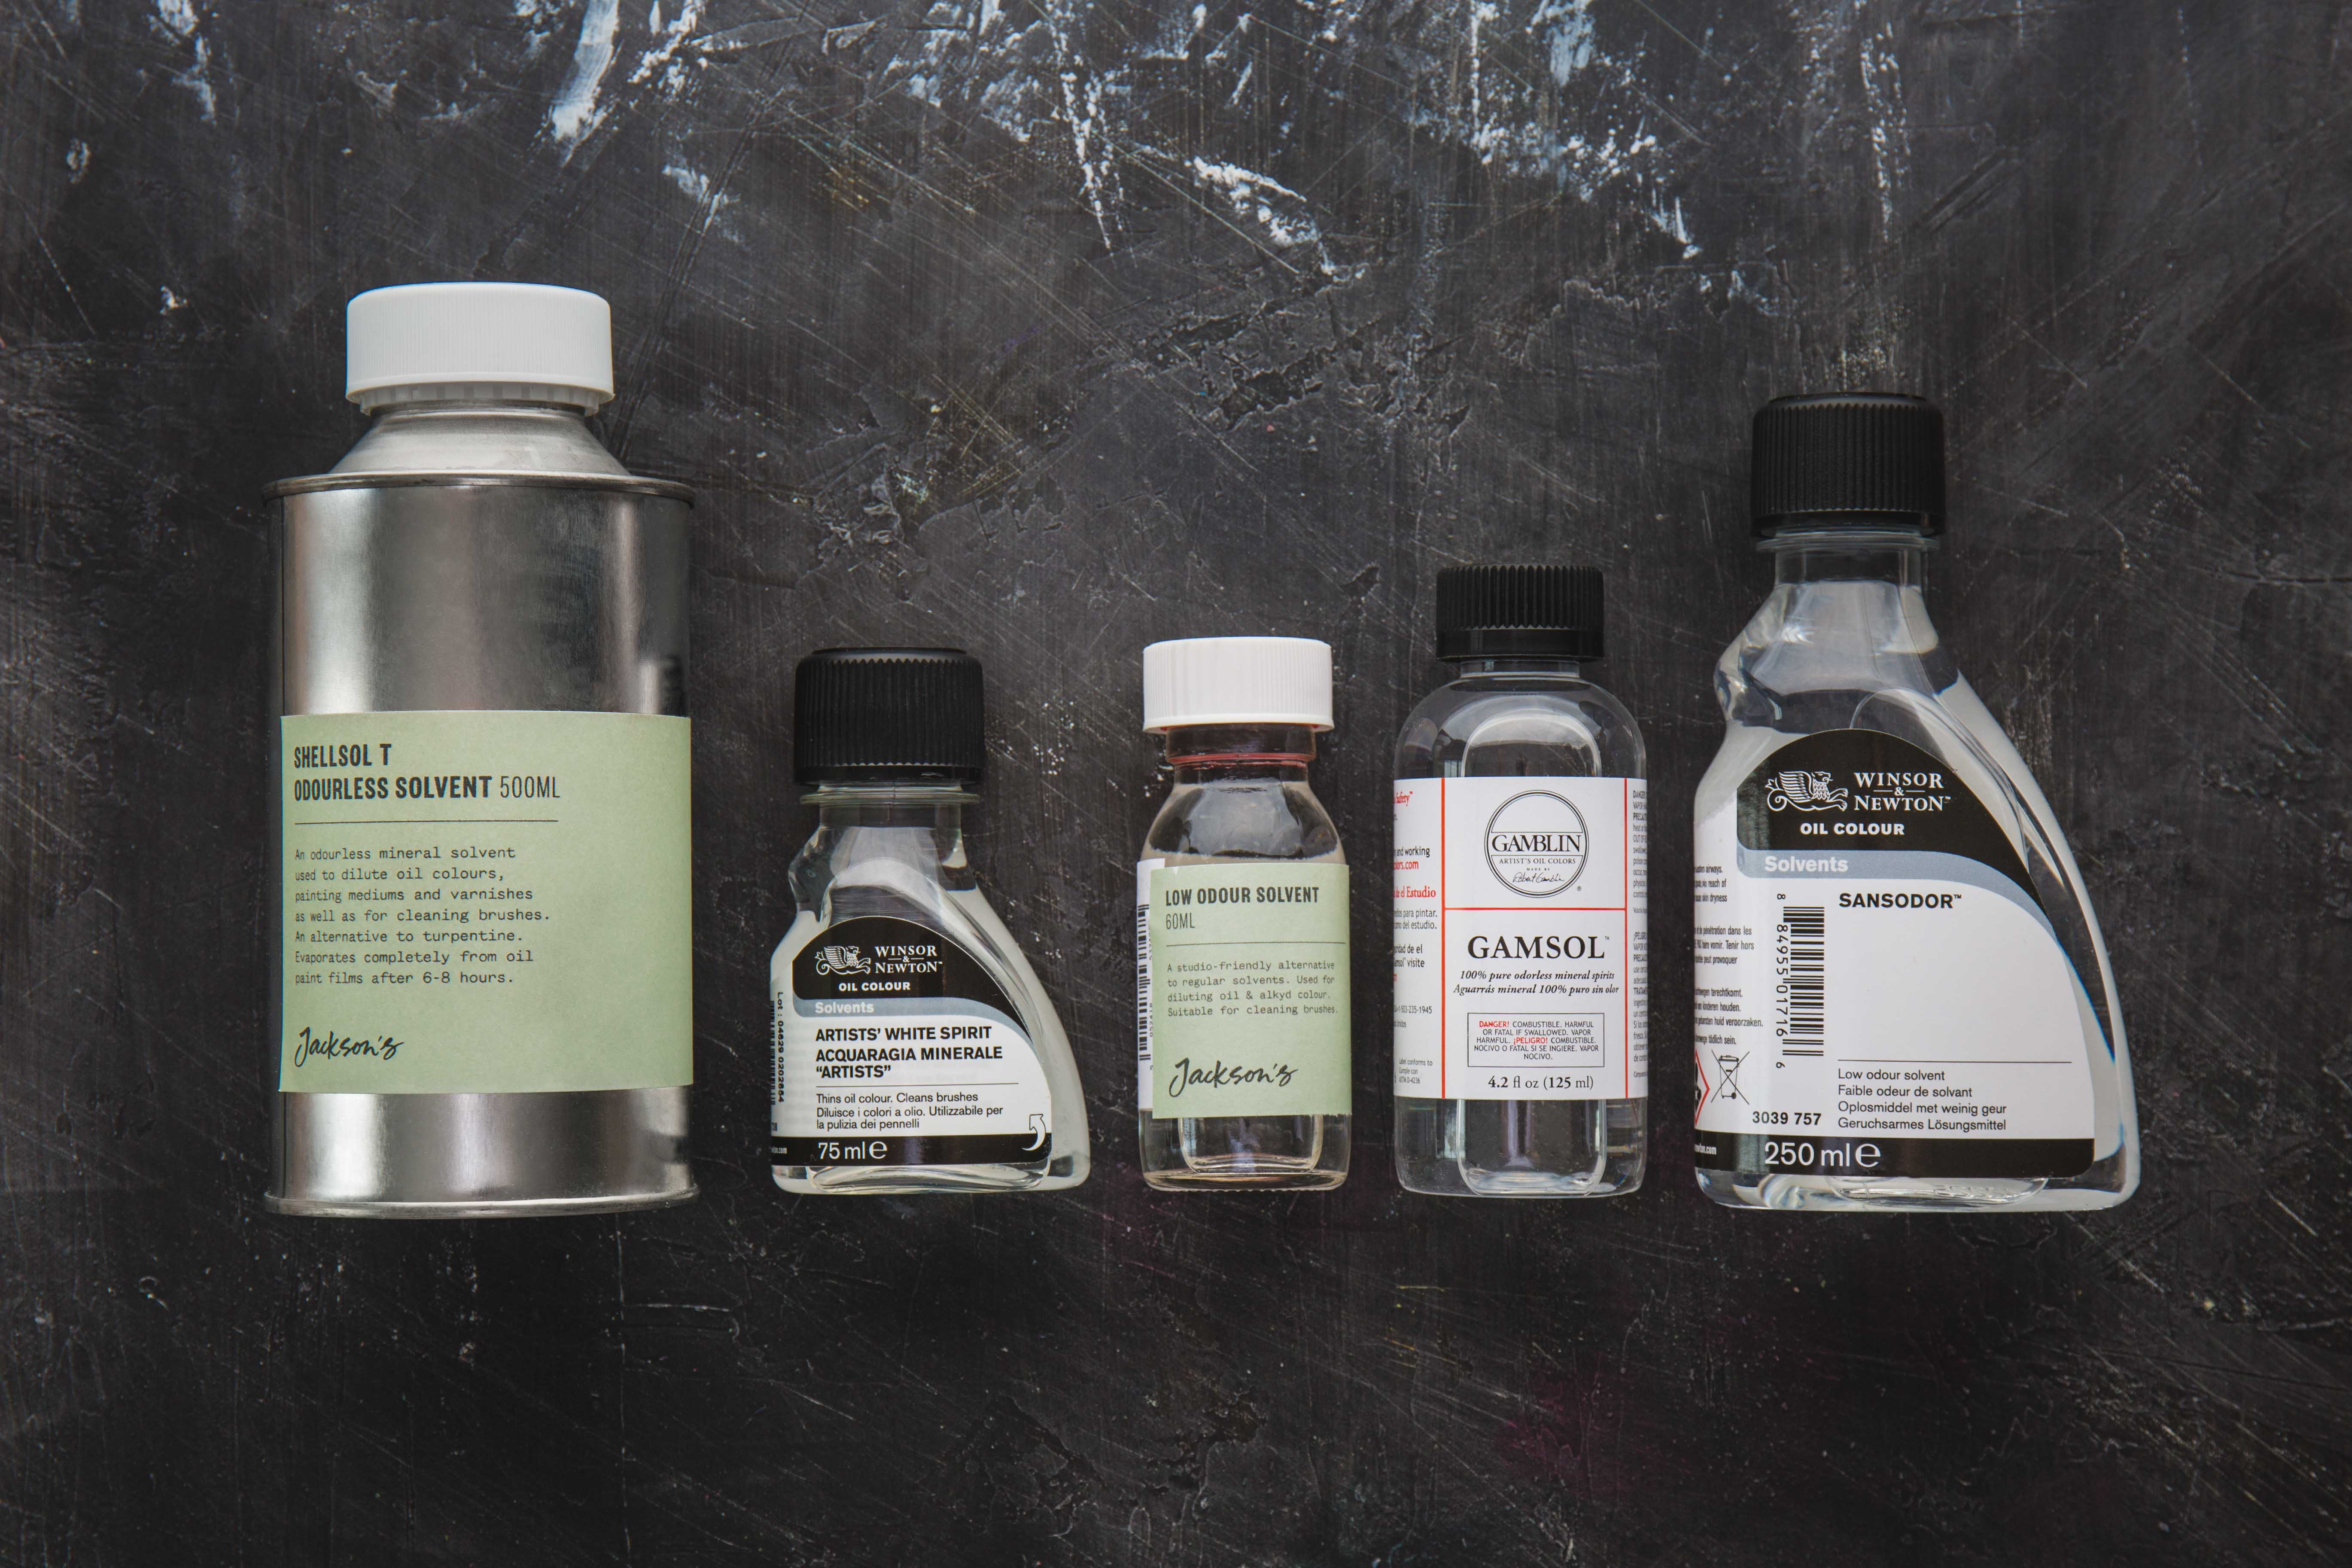 (l-r) Shellsol T, Winsor & Newton Artist White Spirit, Low Odour Solvent, Gamsol and Sansodor - all petroleum distillate based solvents